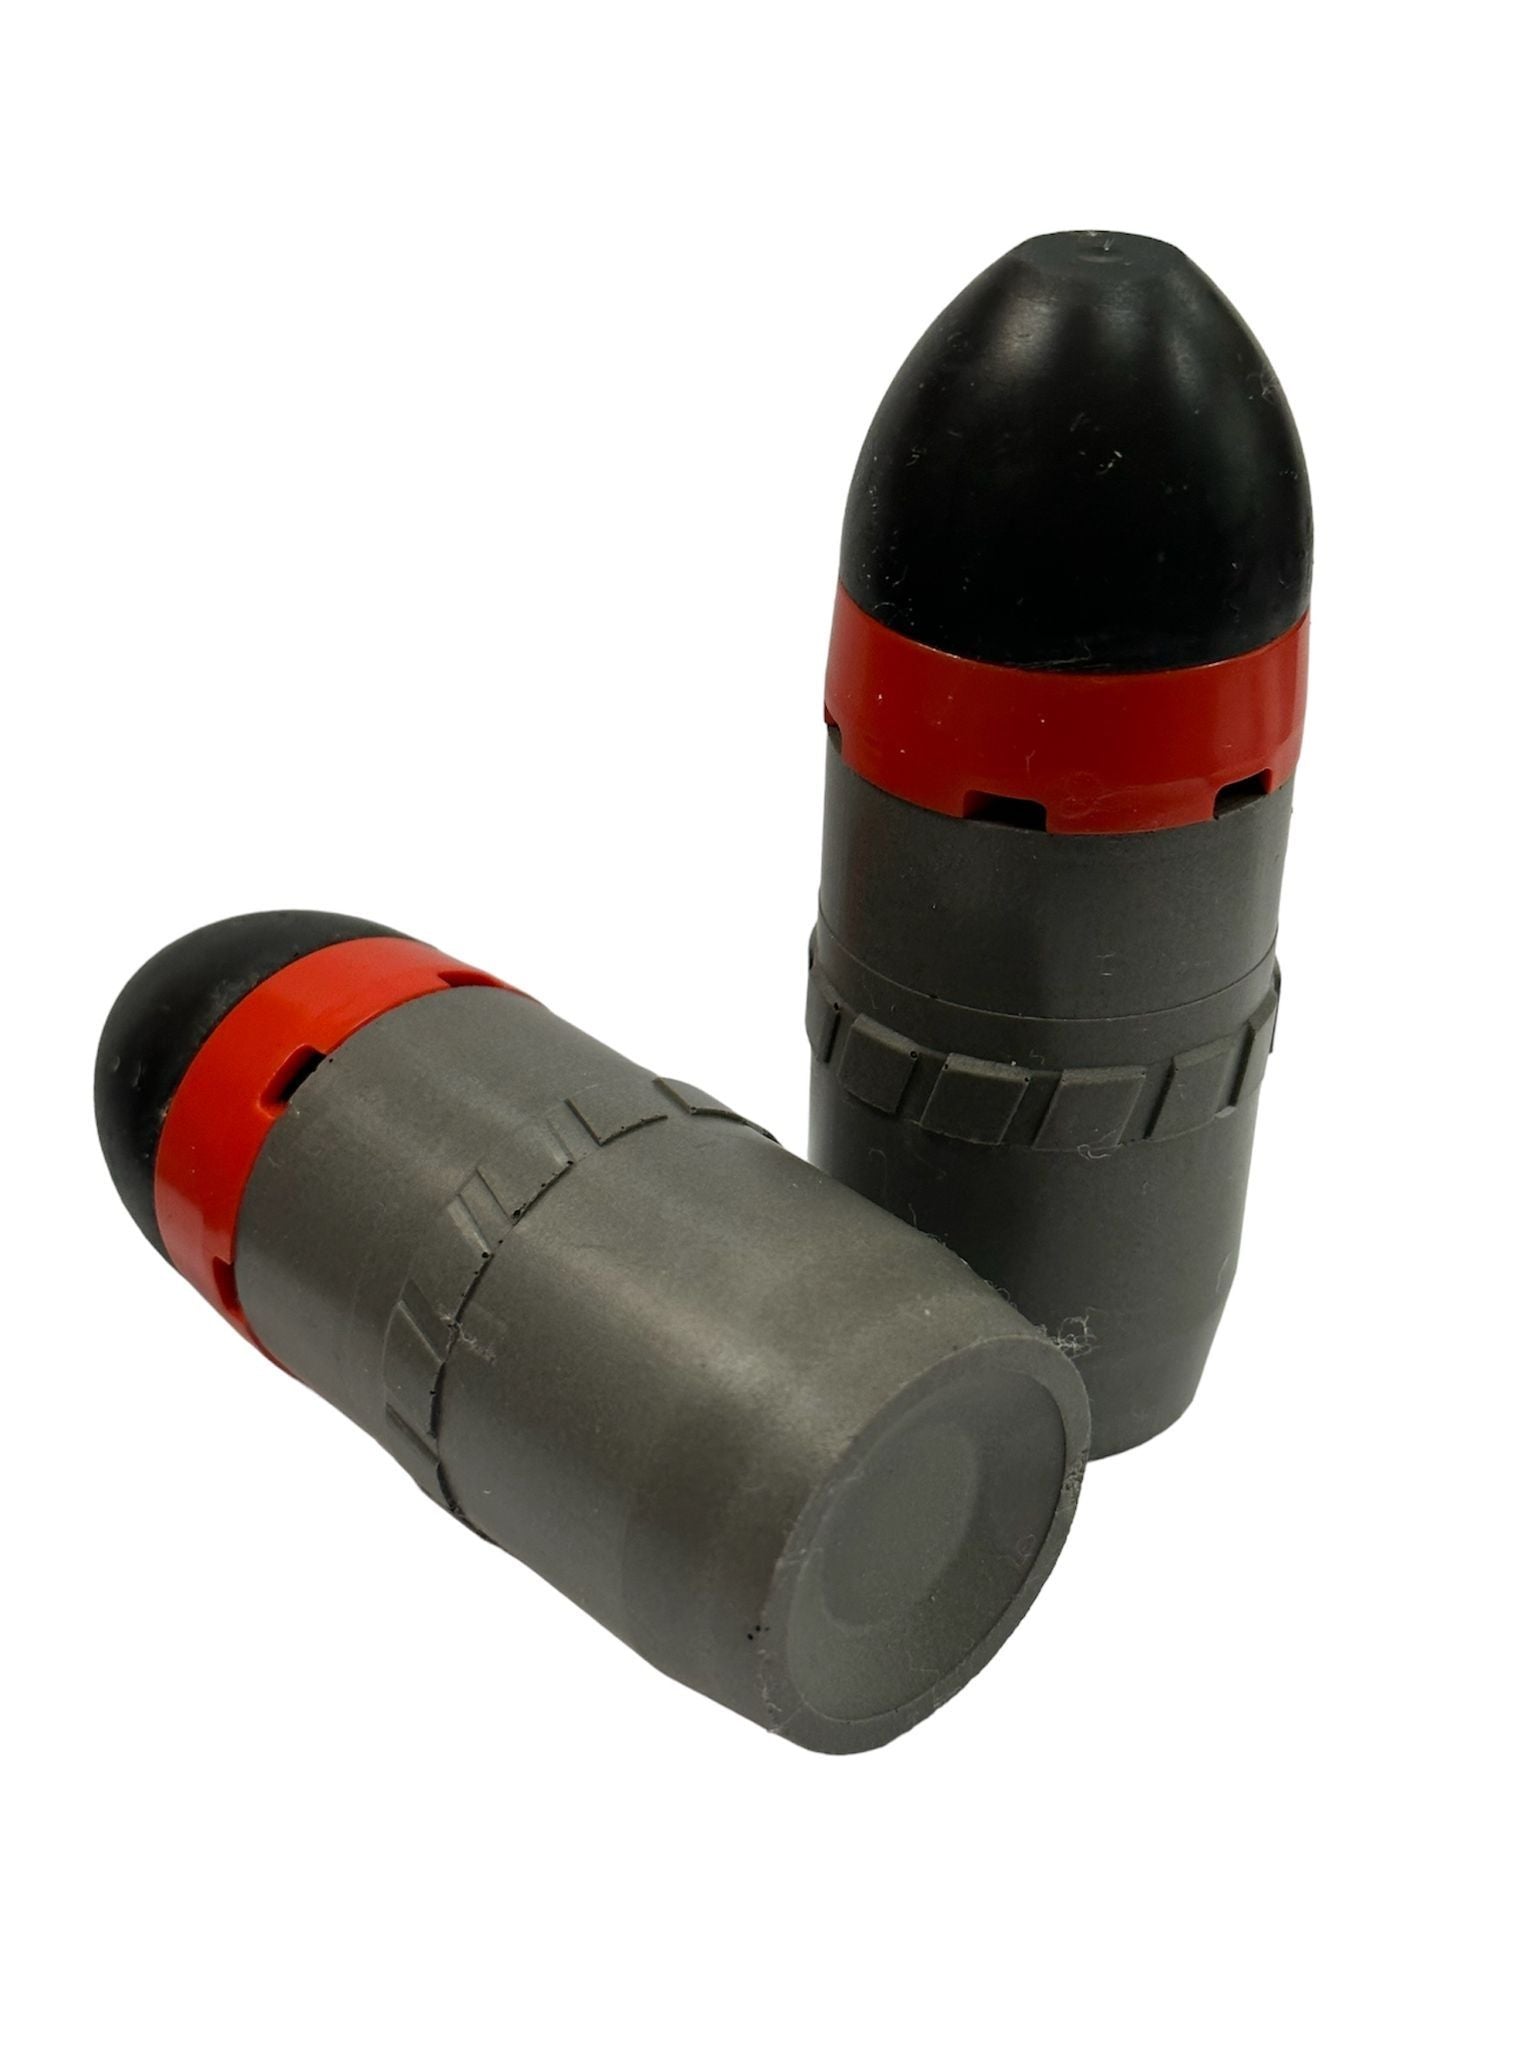 TAGINN Velum MK2 Red – Smoke Launching Projectiles